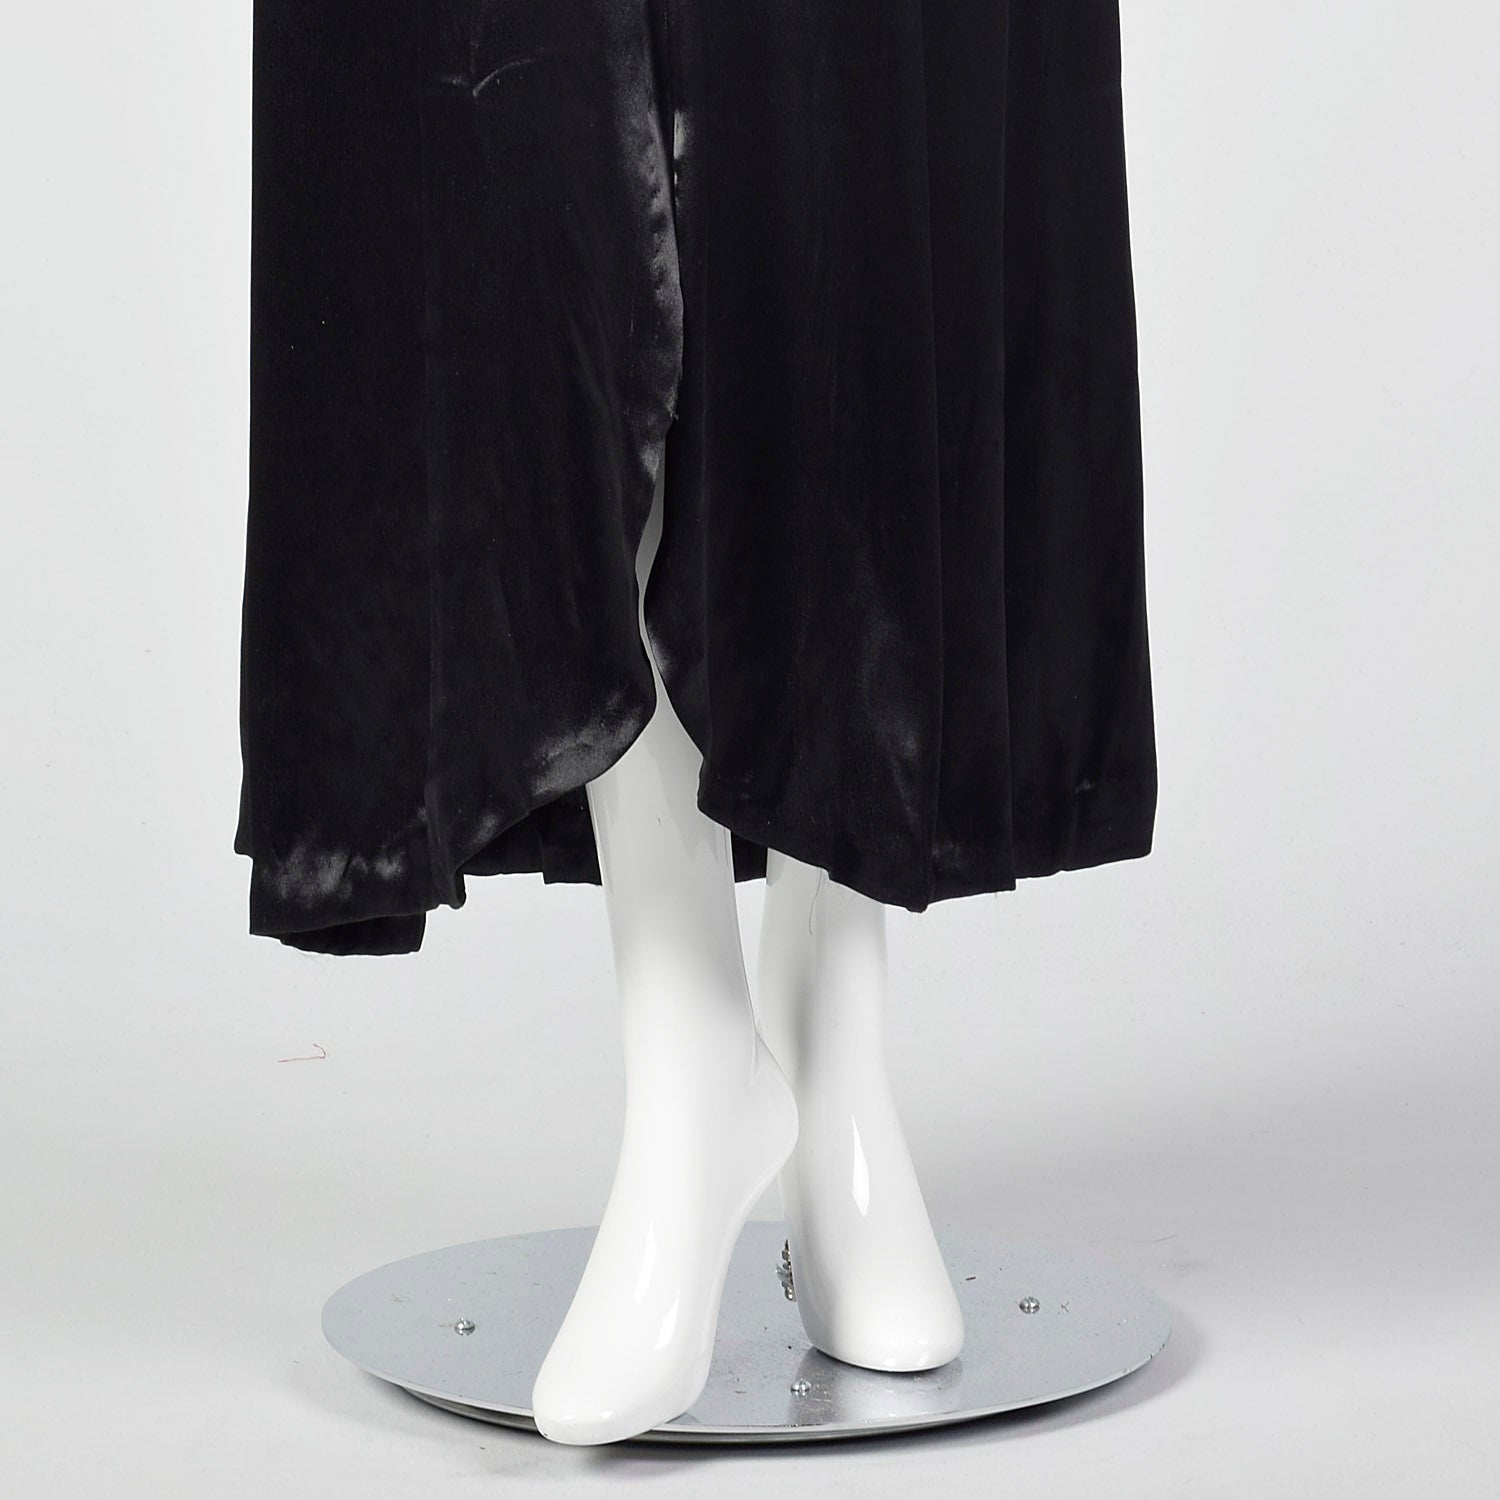 1930s Halter Dress in Black Liquid Satin